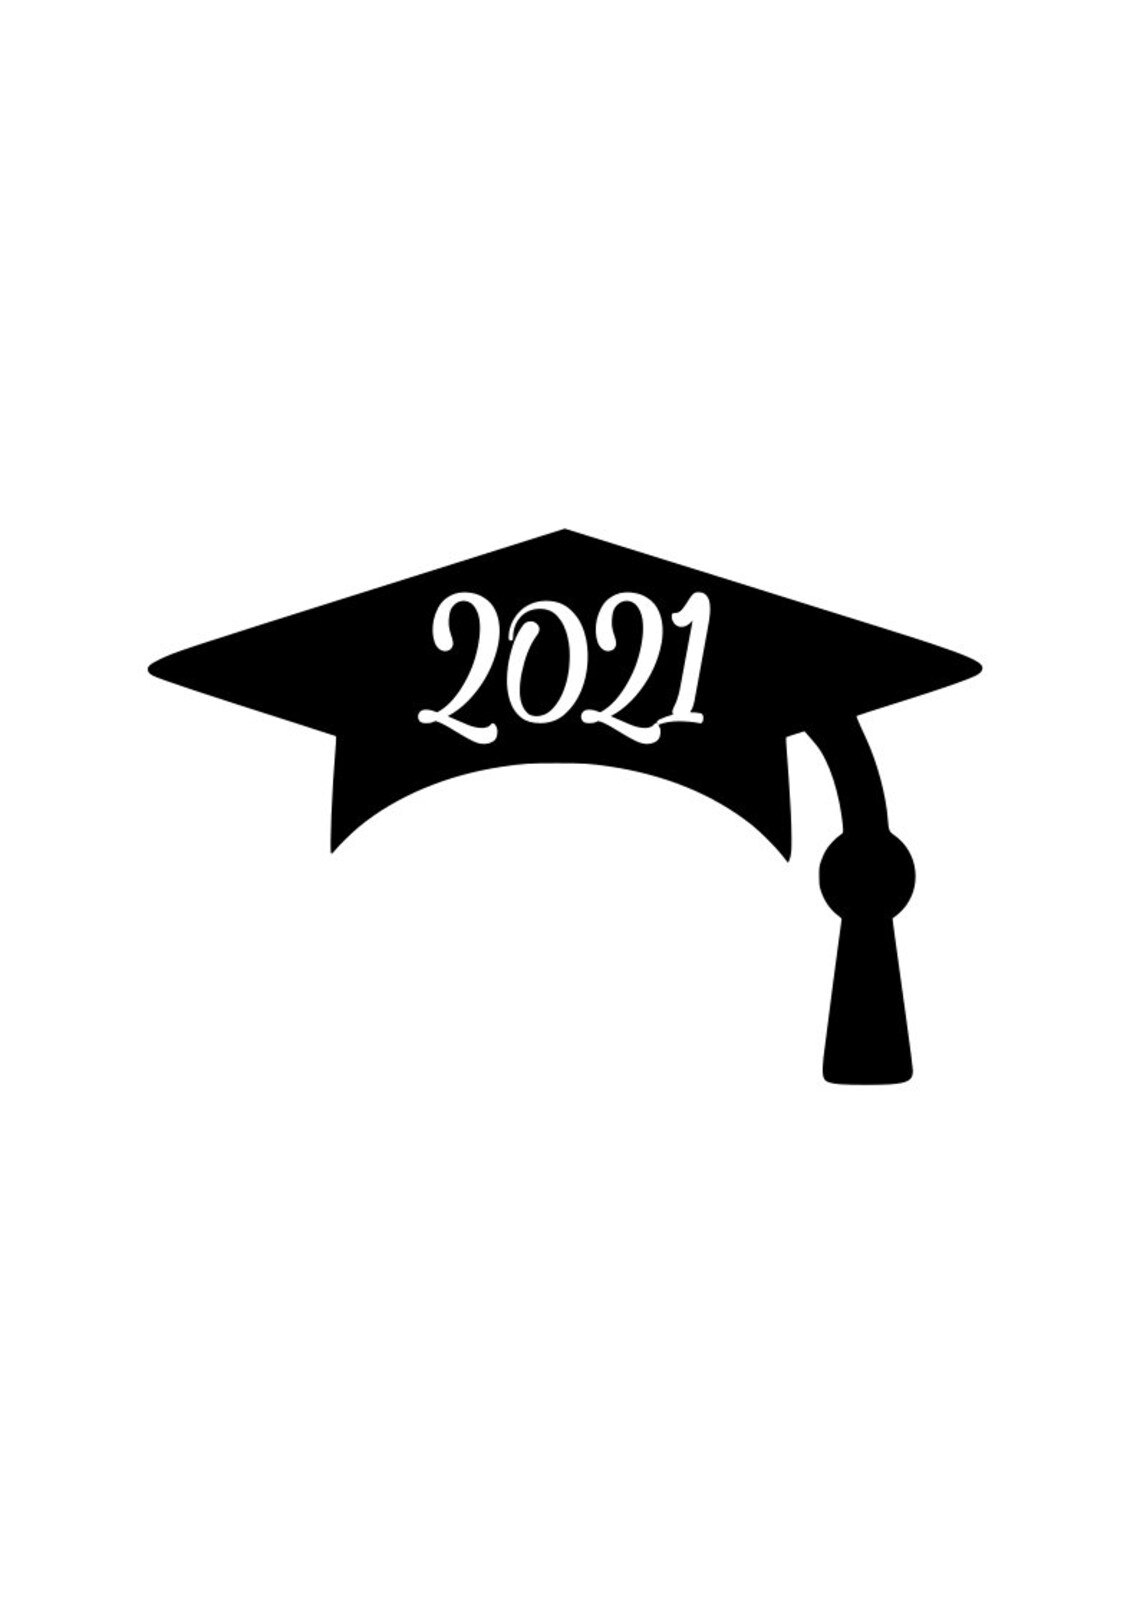 Download 2021 Graduation Cap SVG Class of 2021 SVG Senior 2021 | Etsy